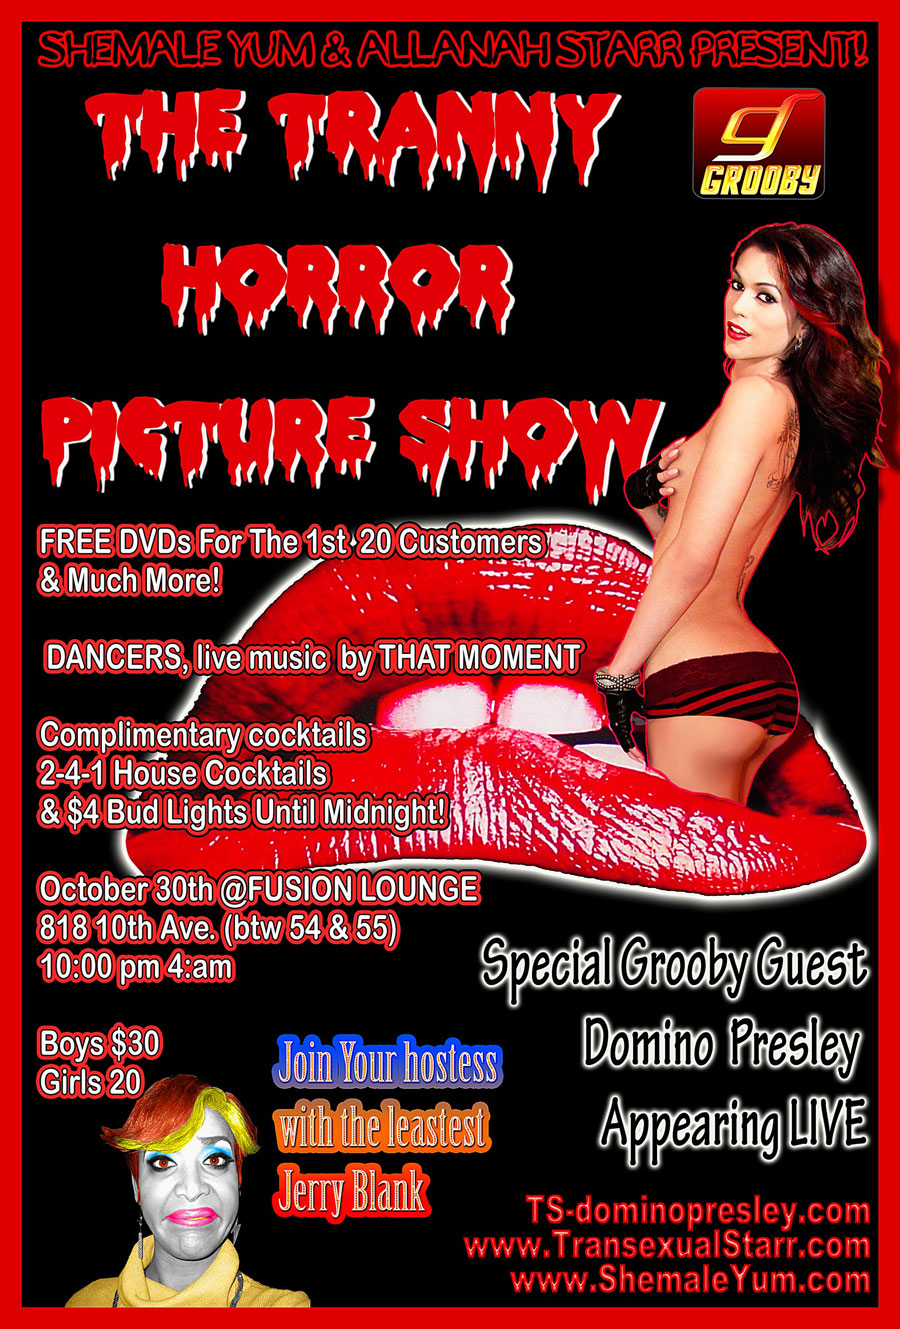 Tranny Pornstars Domino Presley - Join Shemale Pornstar Domino Presley For Halloween Hijinks This Year!